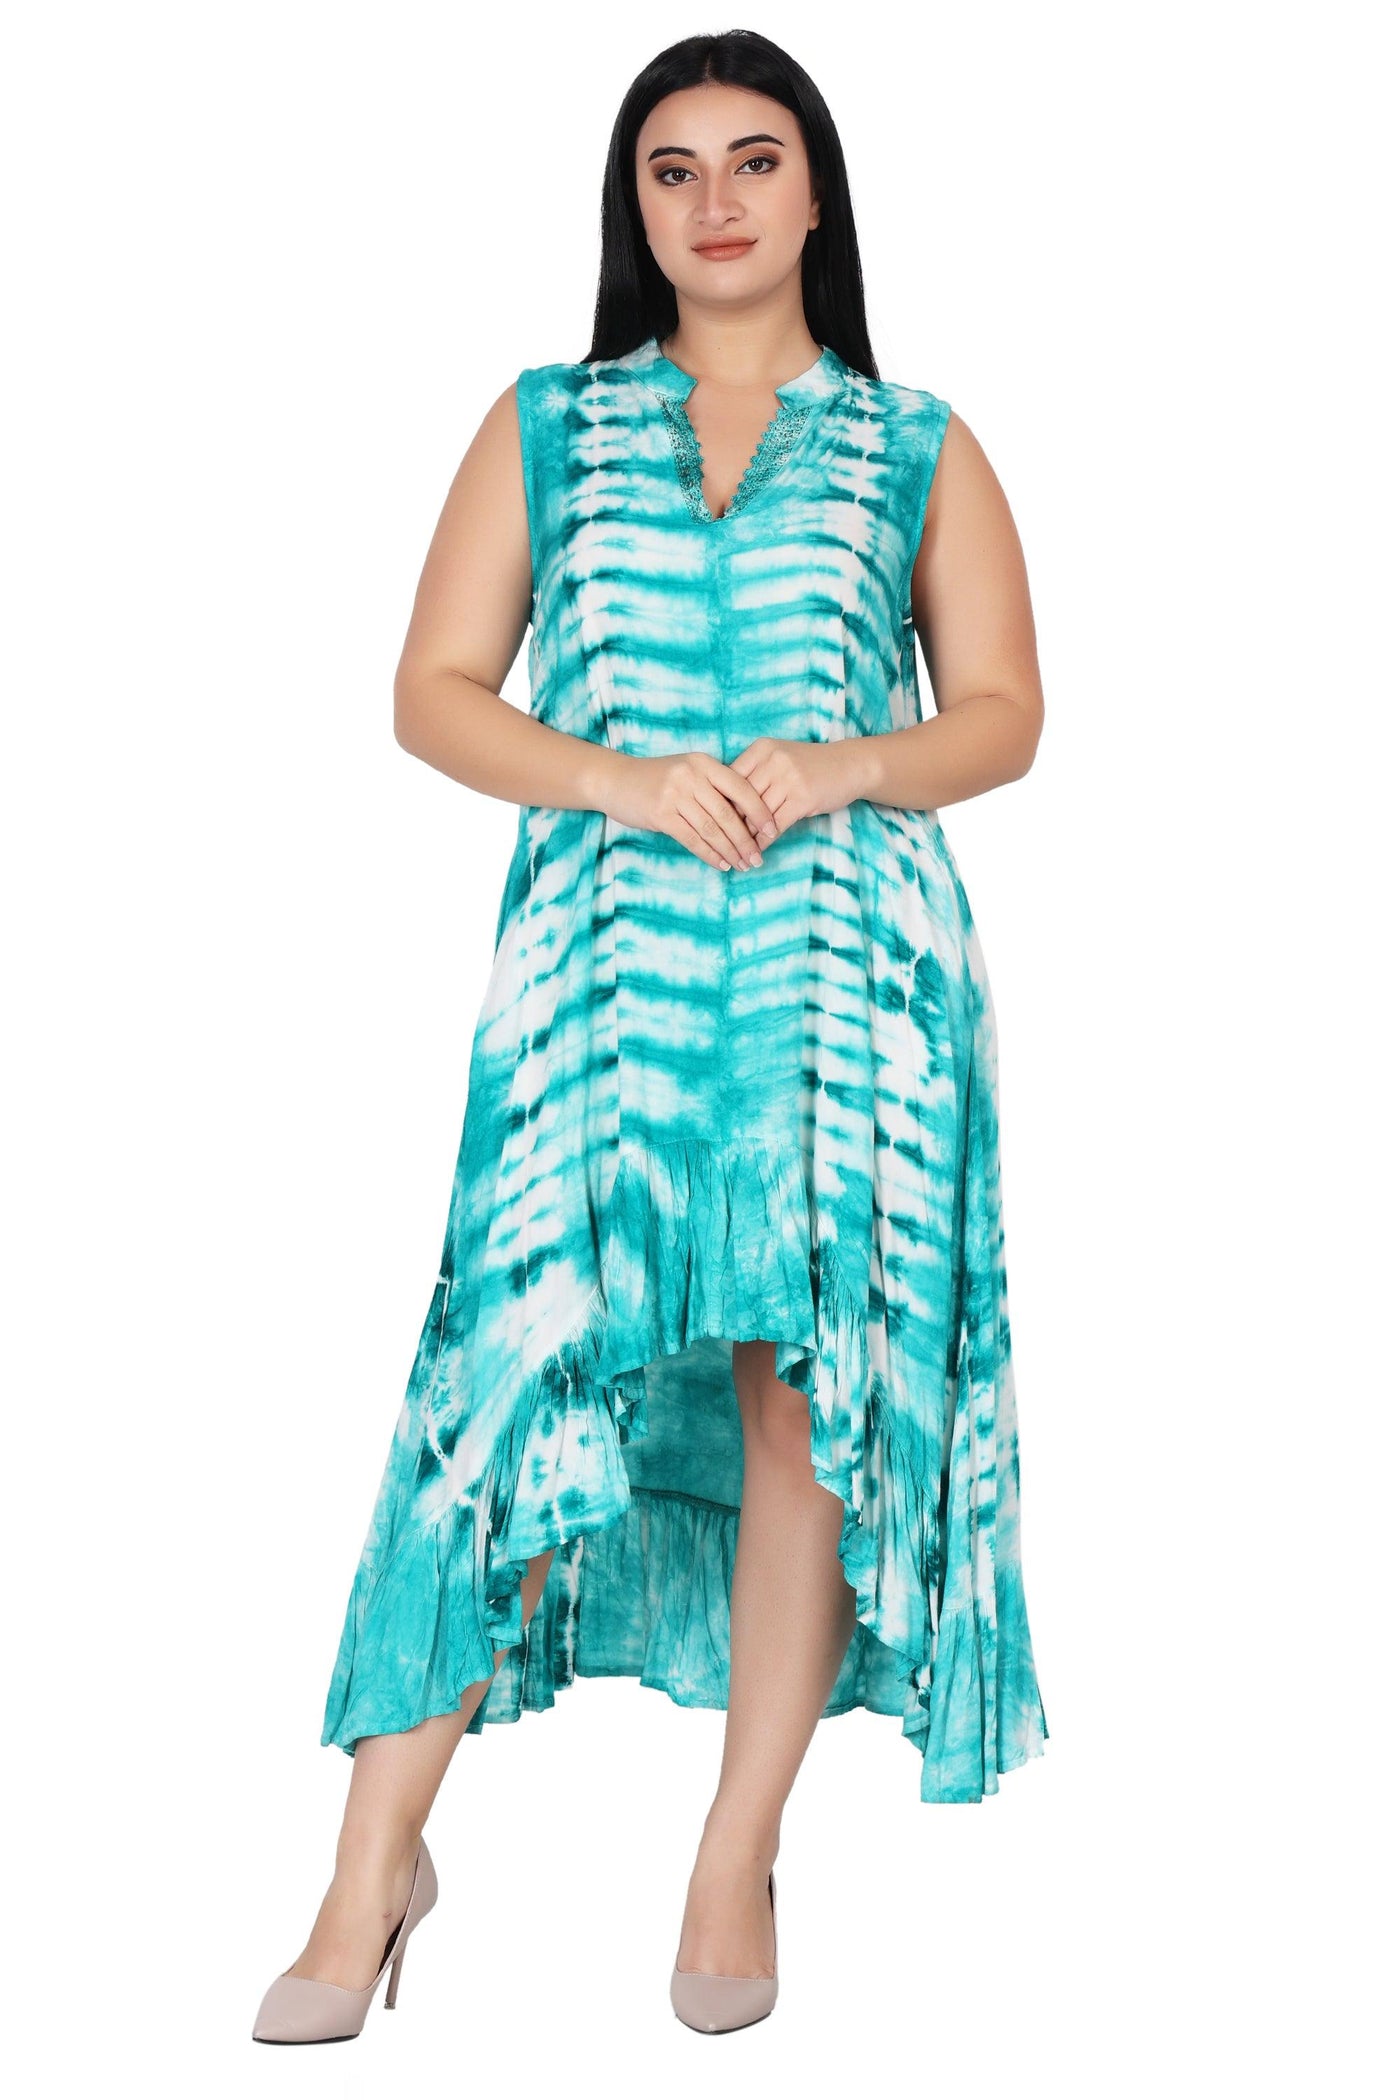 Laced V-Neck Tie Dye Dress 482133  - Advance Apparels Inc